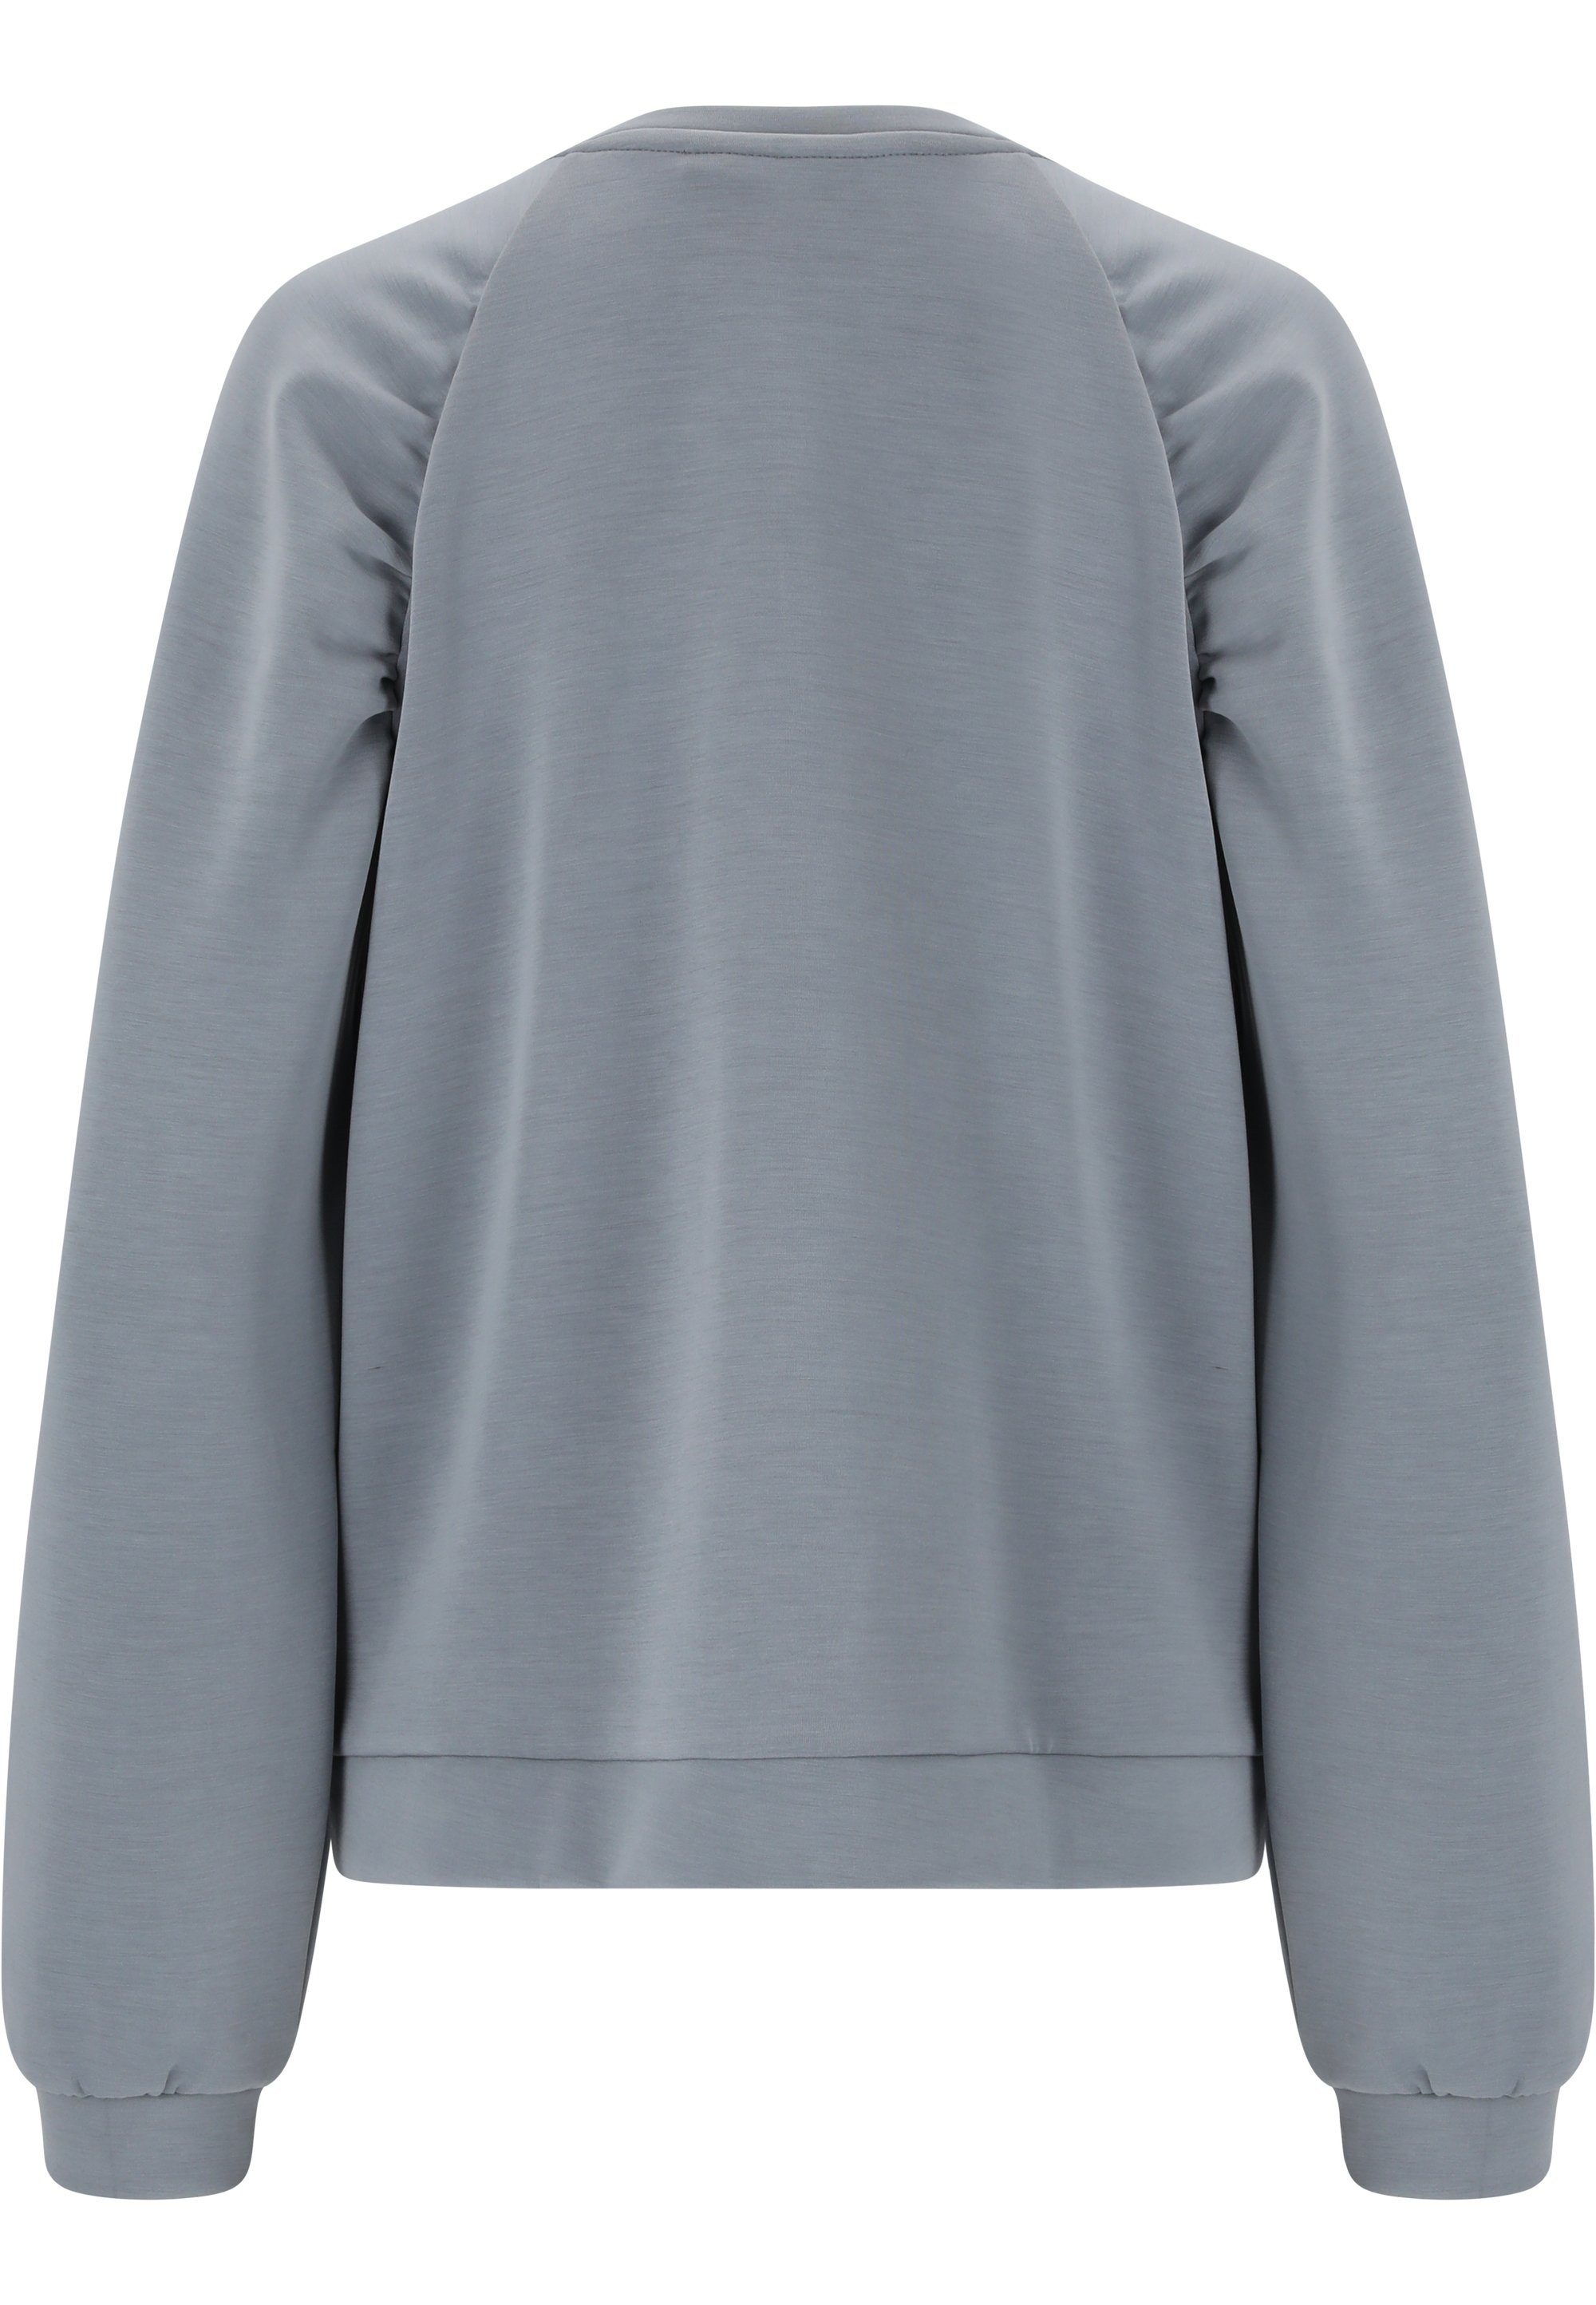 ATHLECIA Sweatshirt Jillnana in schlichtem hellblau Design